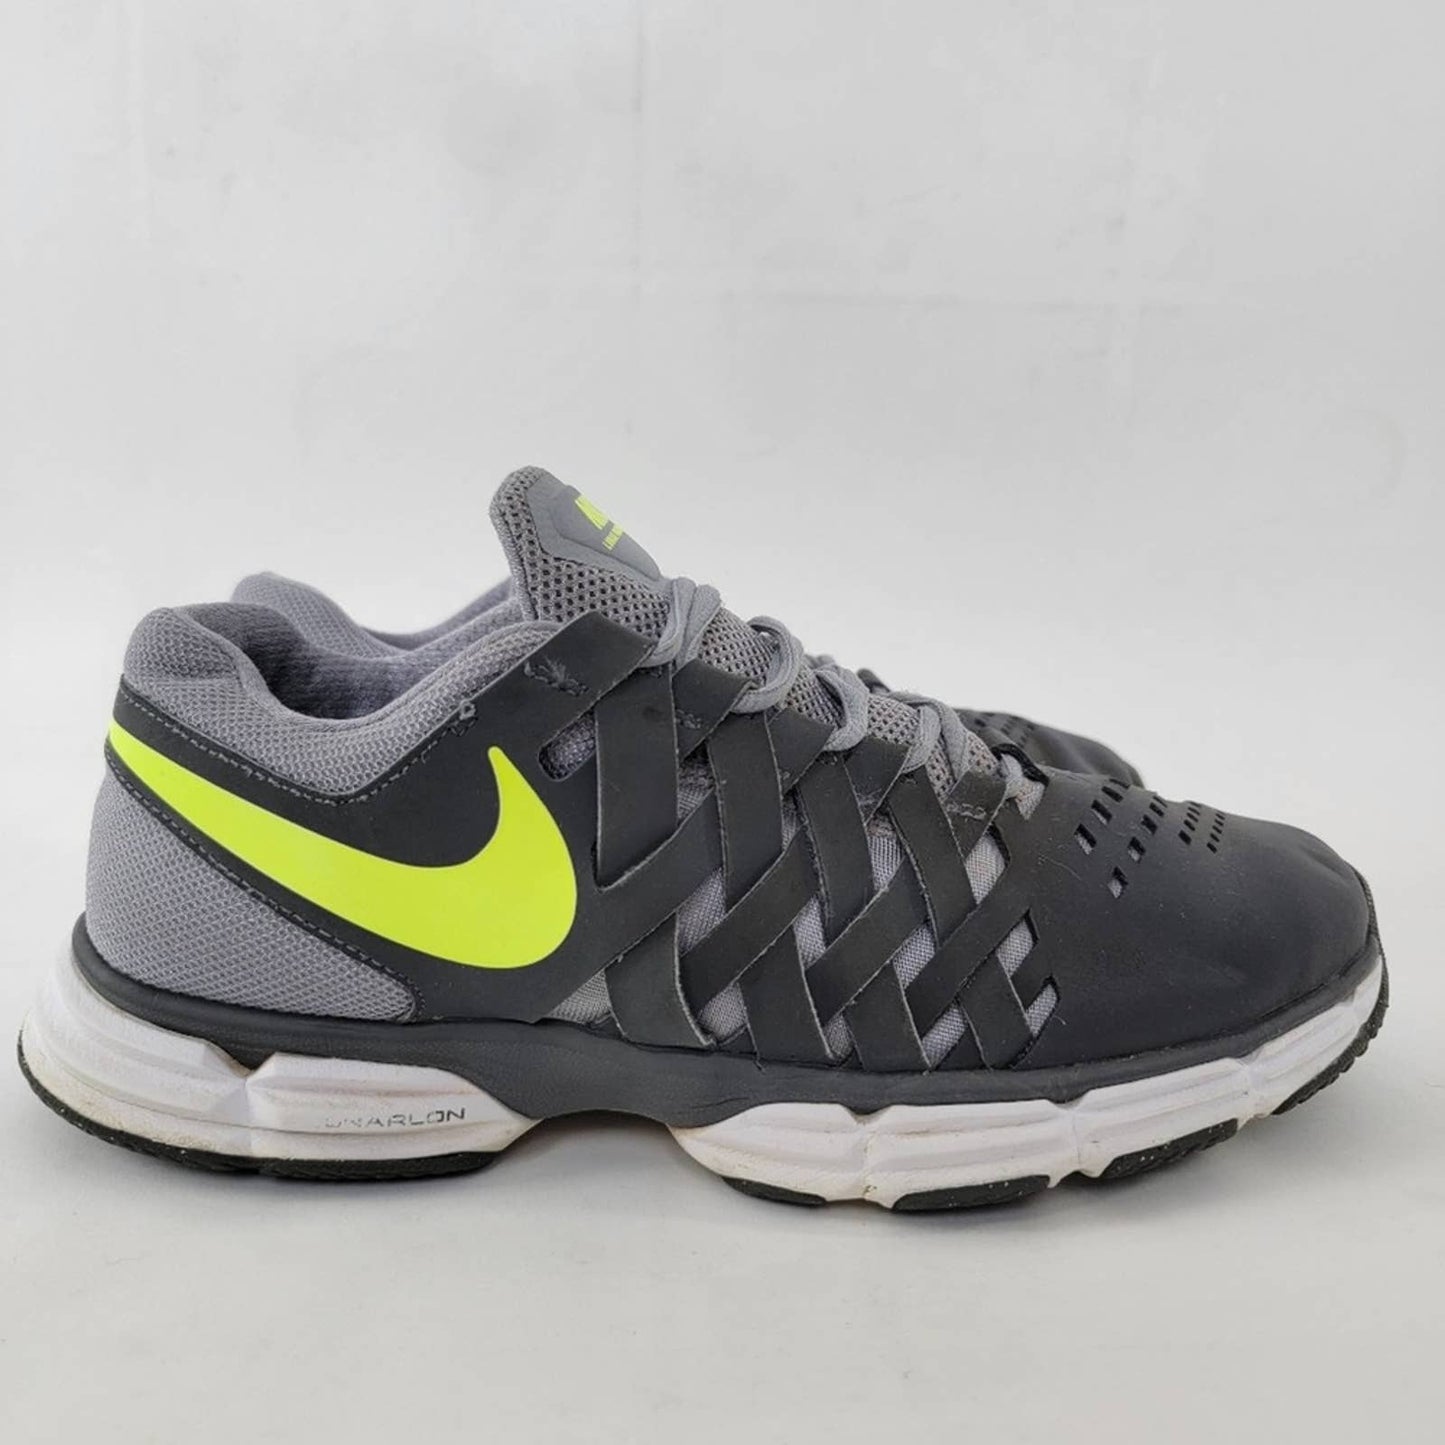 Nike Lunar Fingertrap TR Running Shoes - 8.5/10